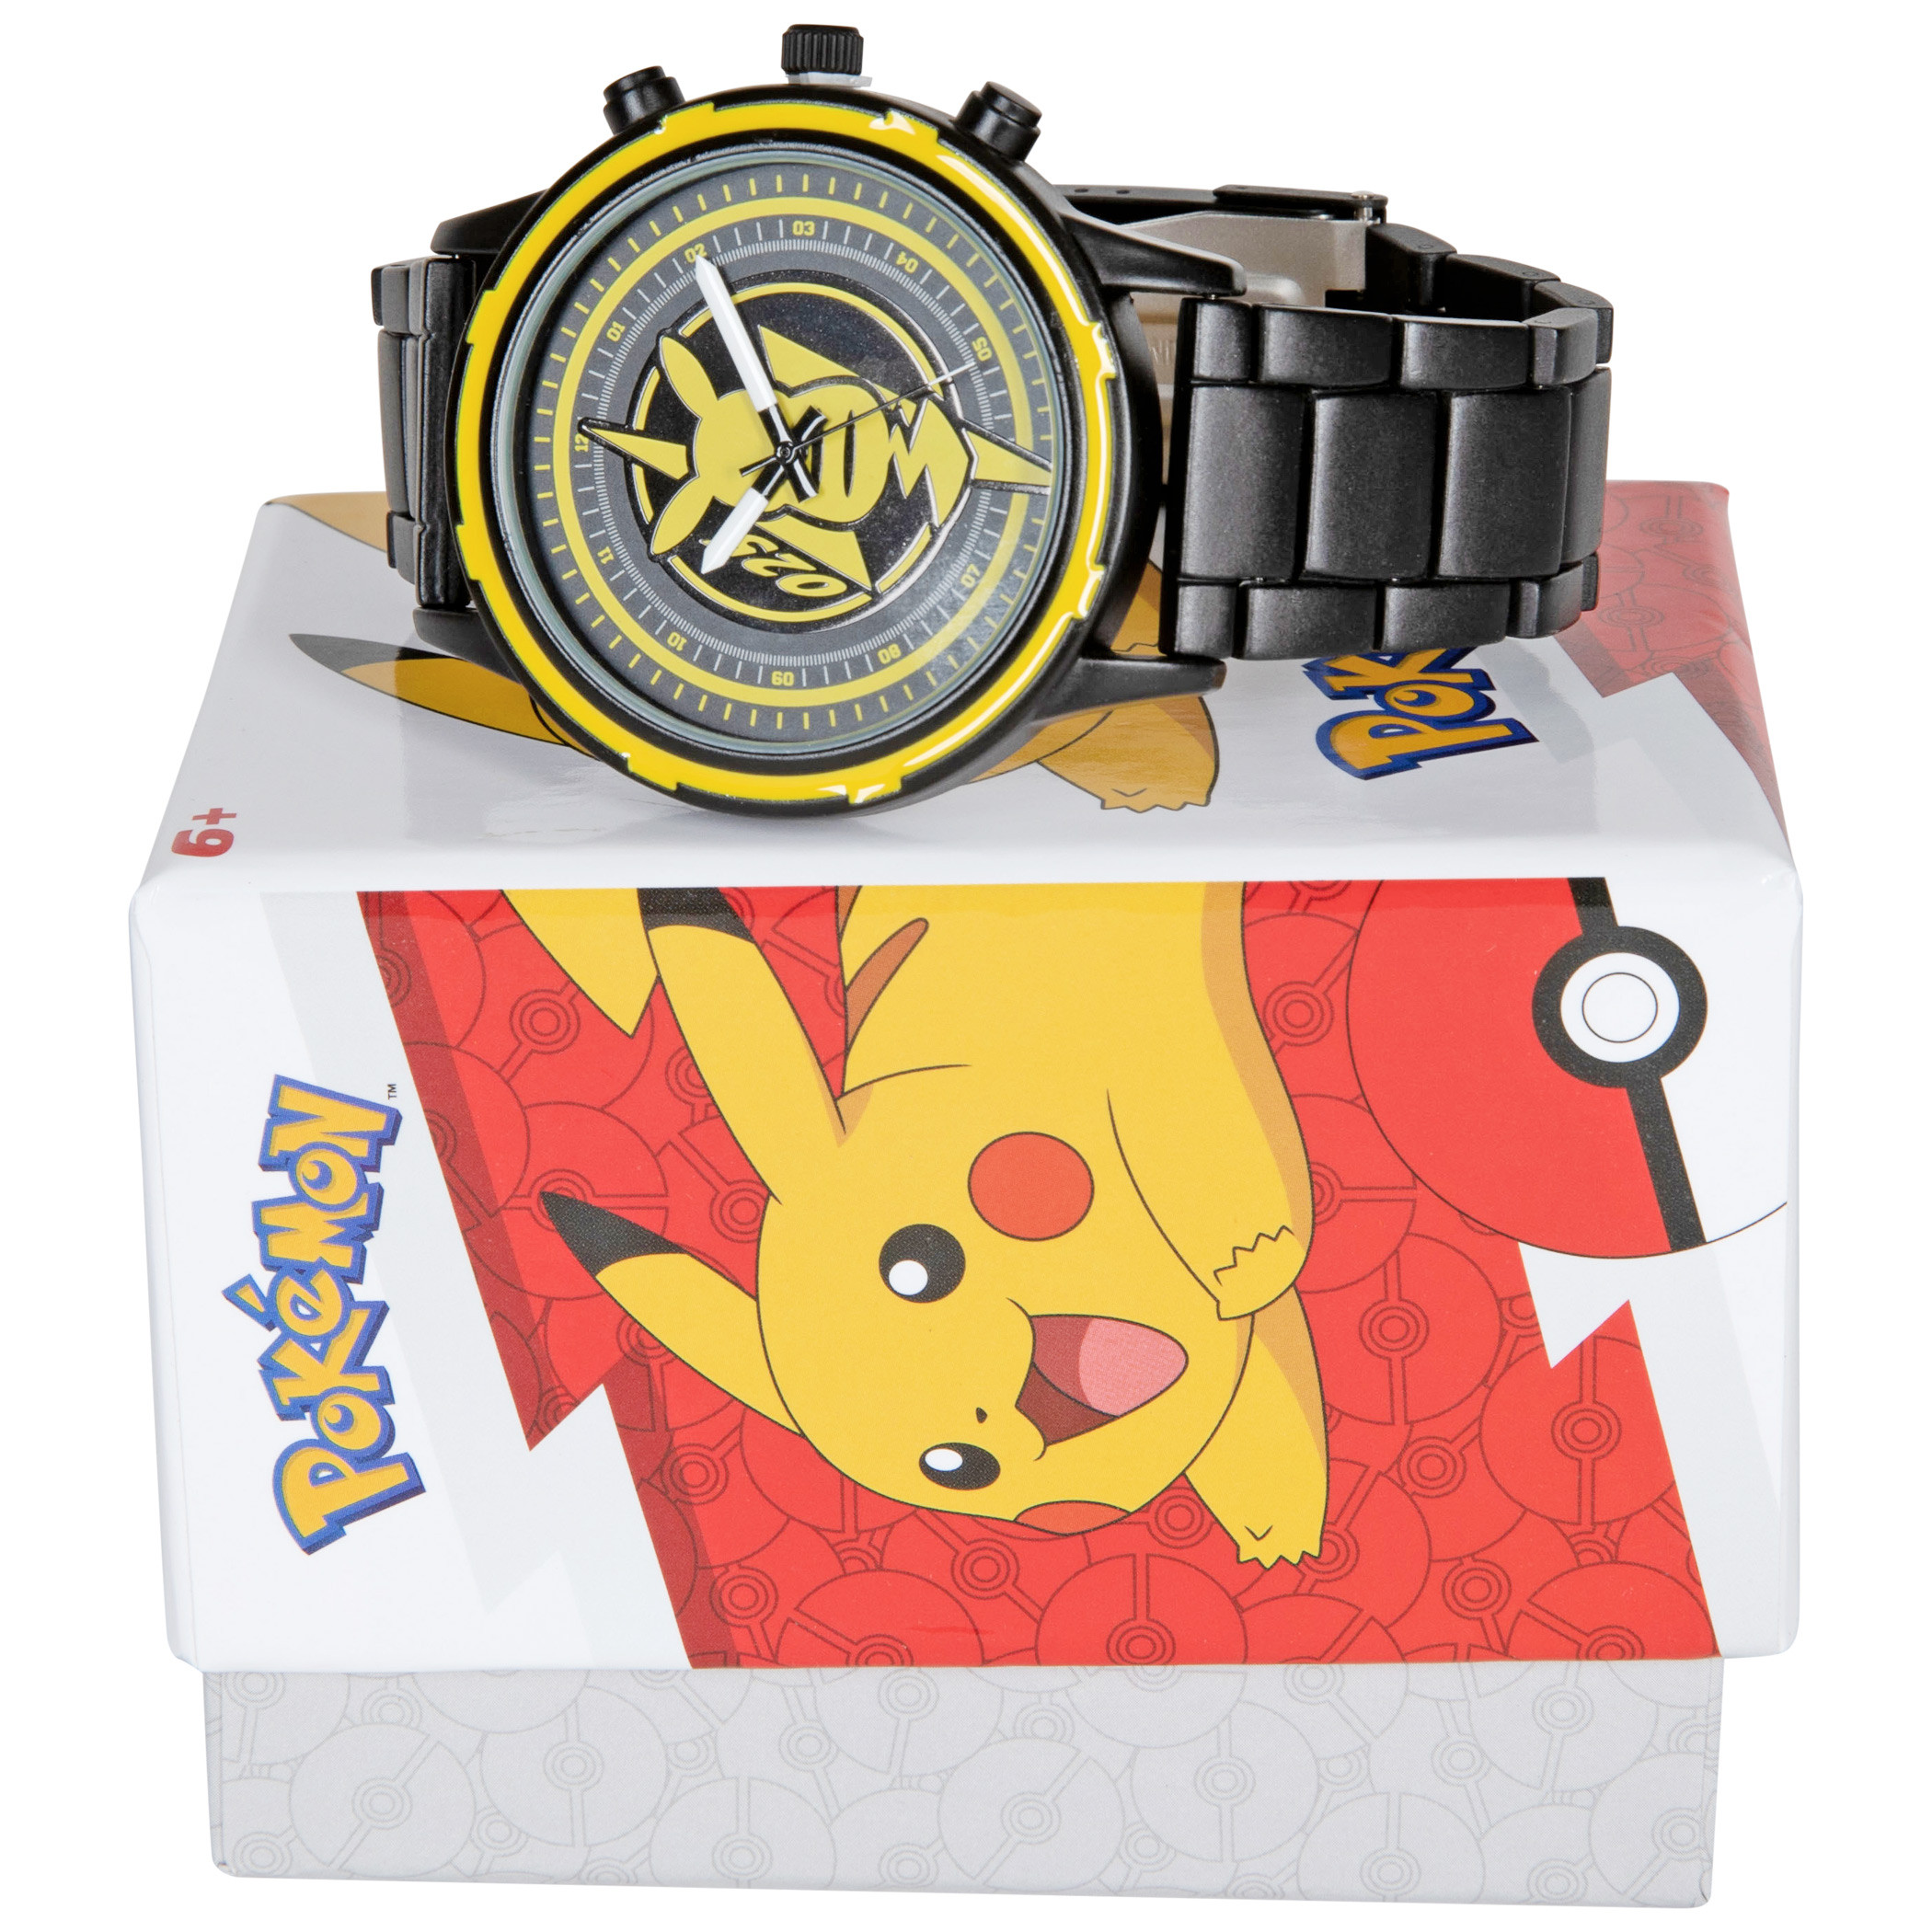 Nintendo Pokémon Electric Type Pikachu Watch with Metal Band